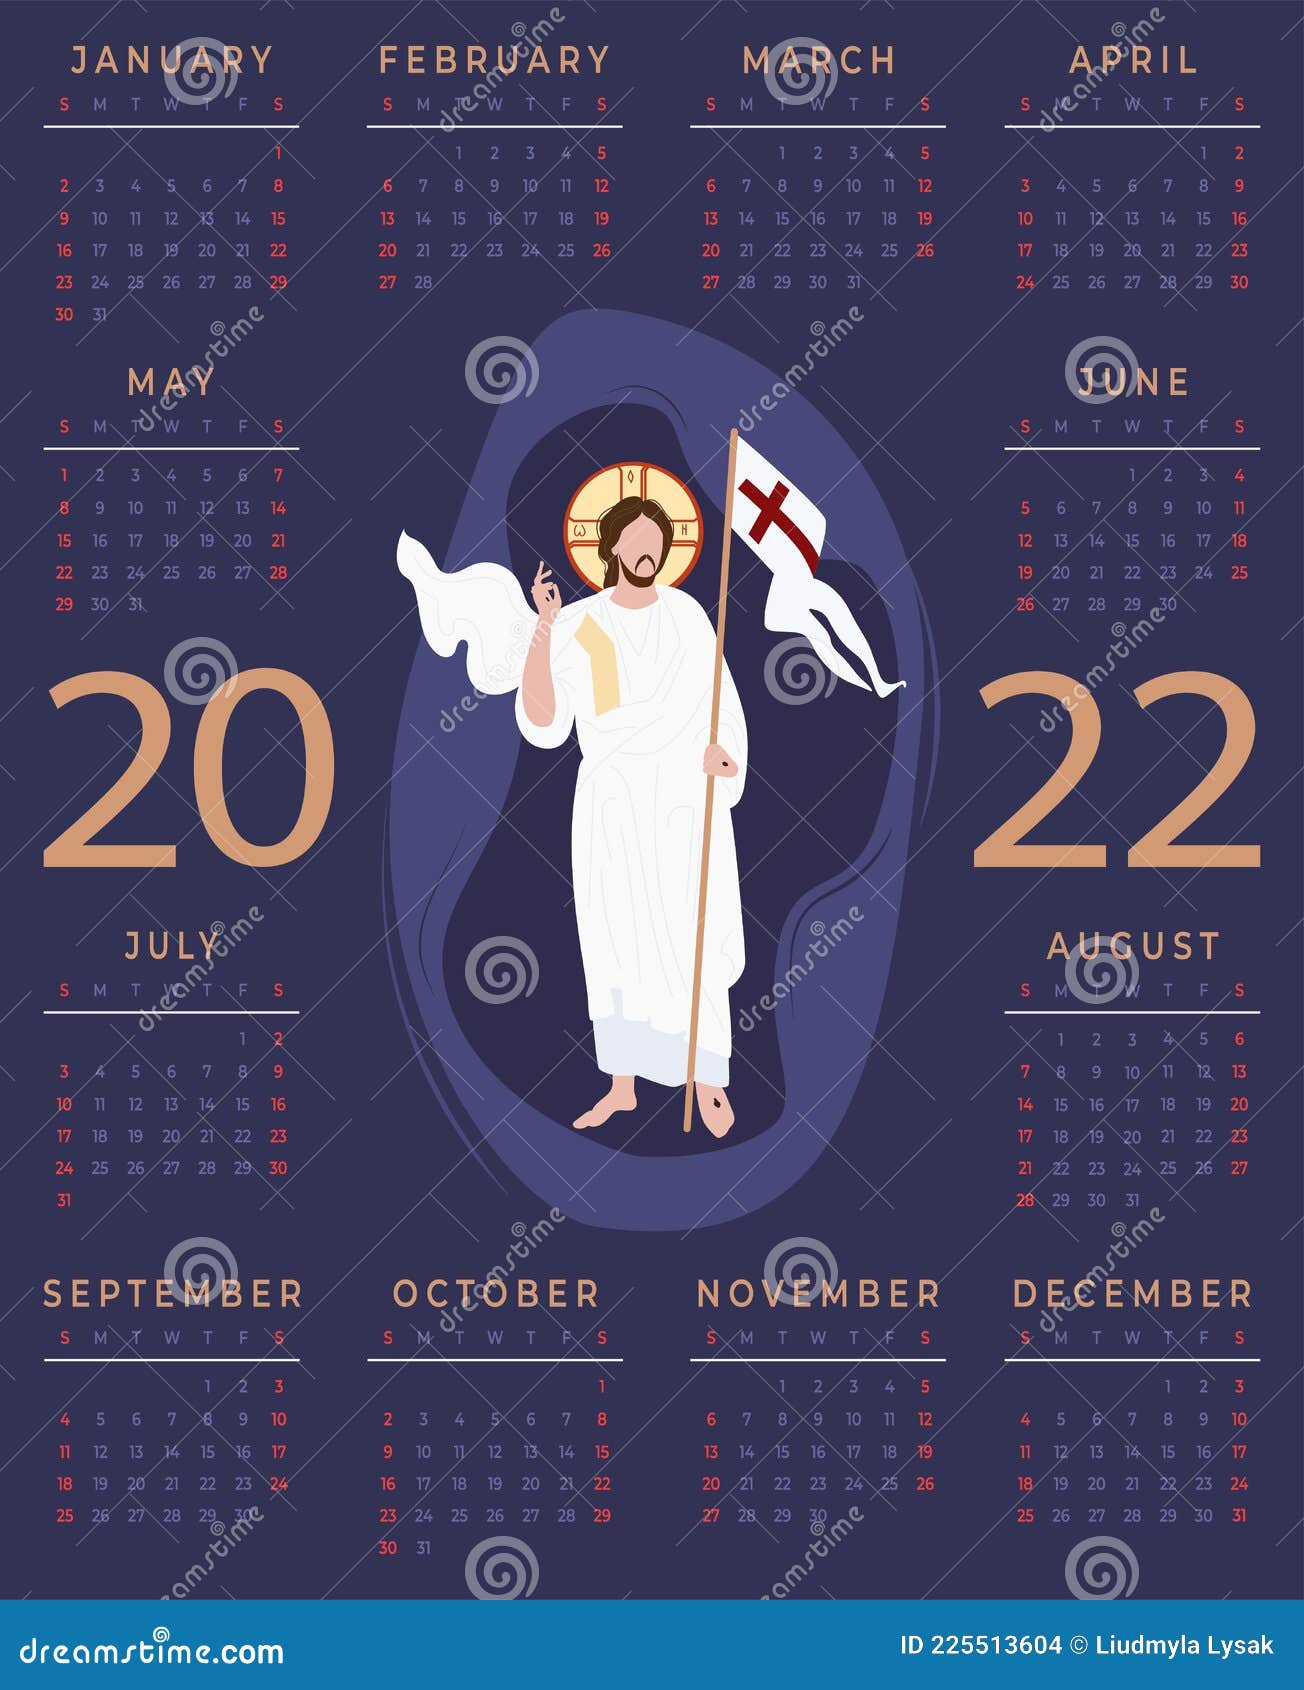 2022-annual-religious-calendar-with-jesus-christ-the-savior-resurrection-vector-illustration